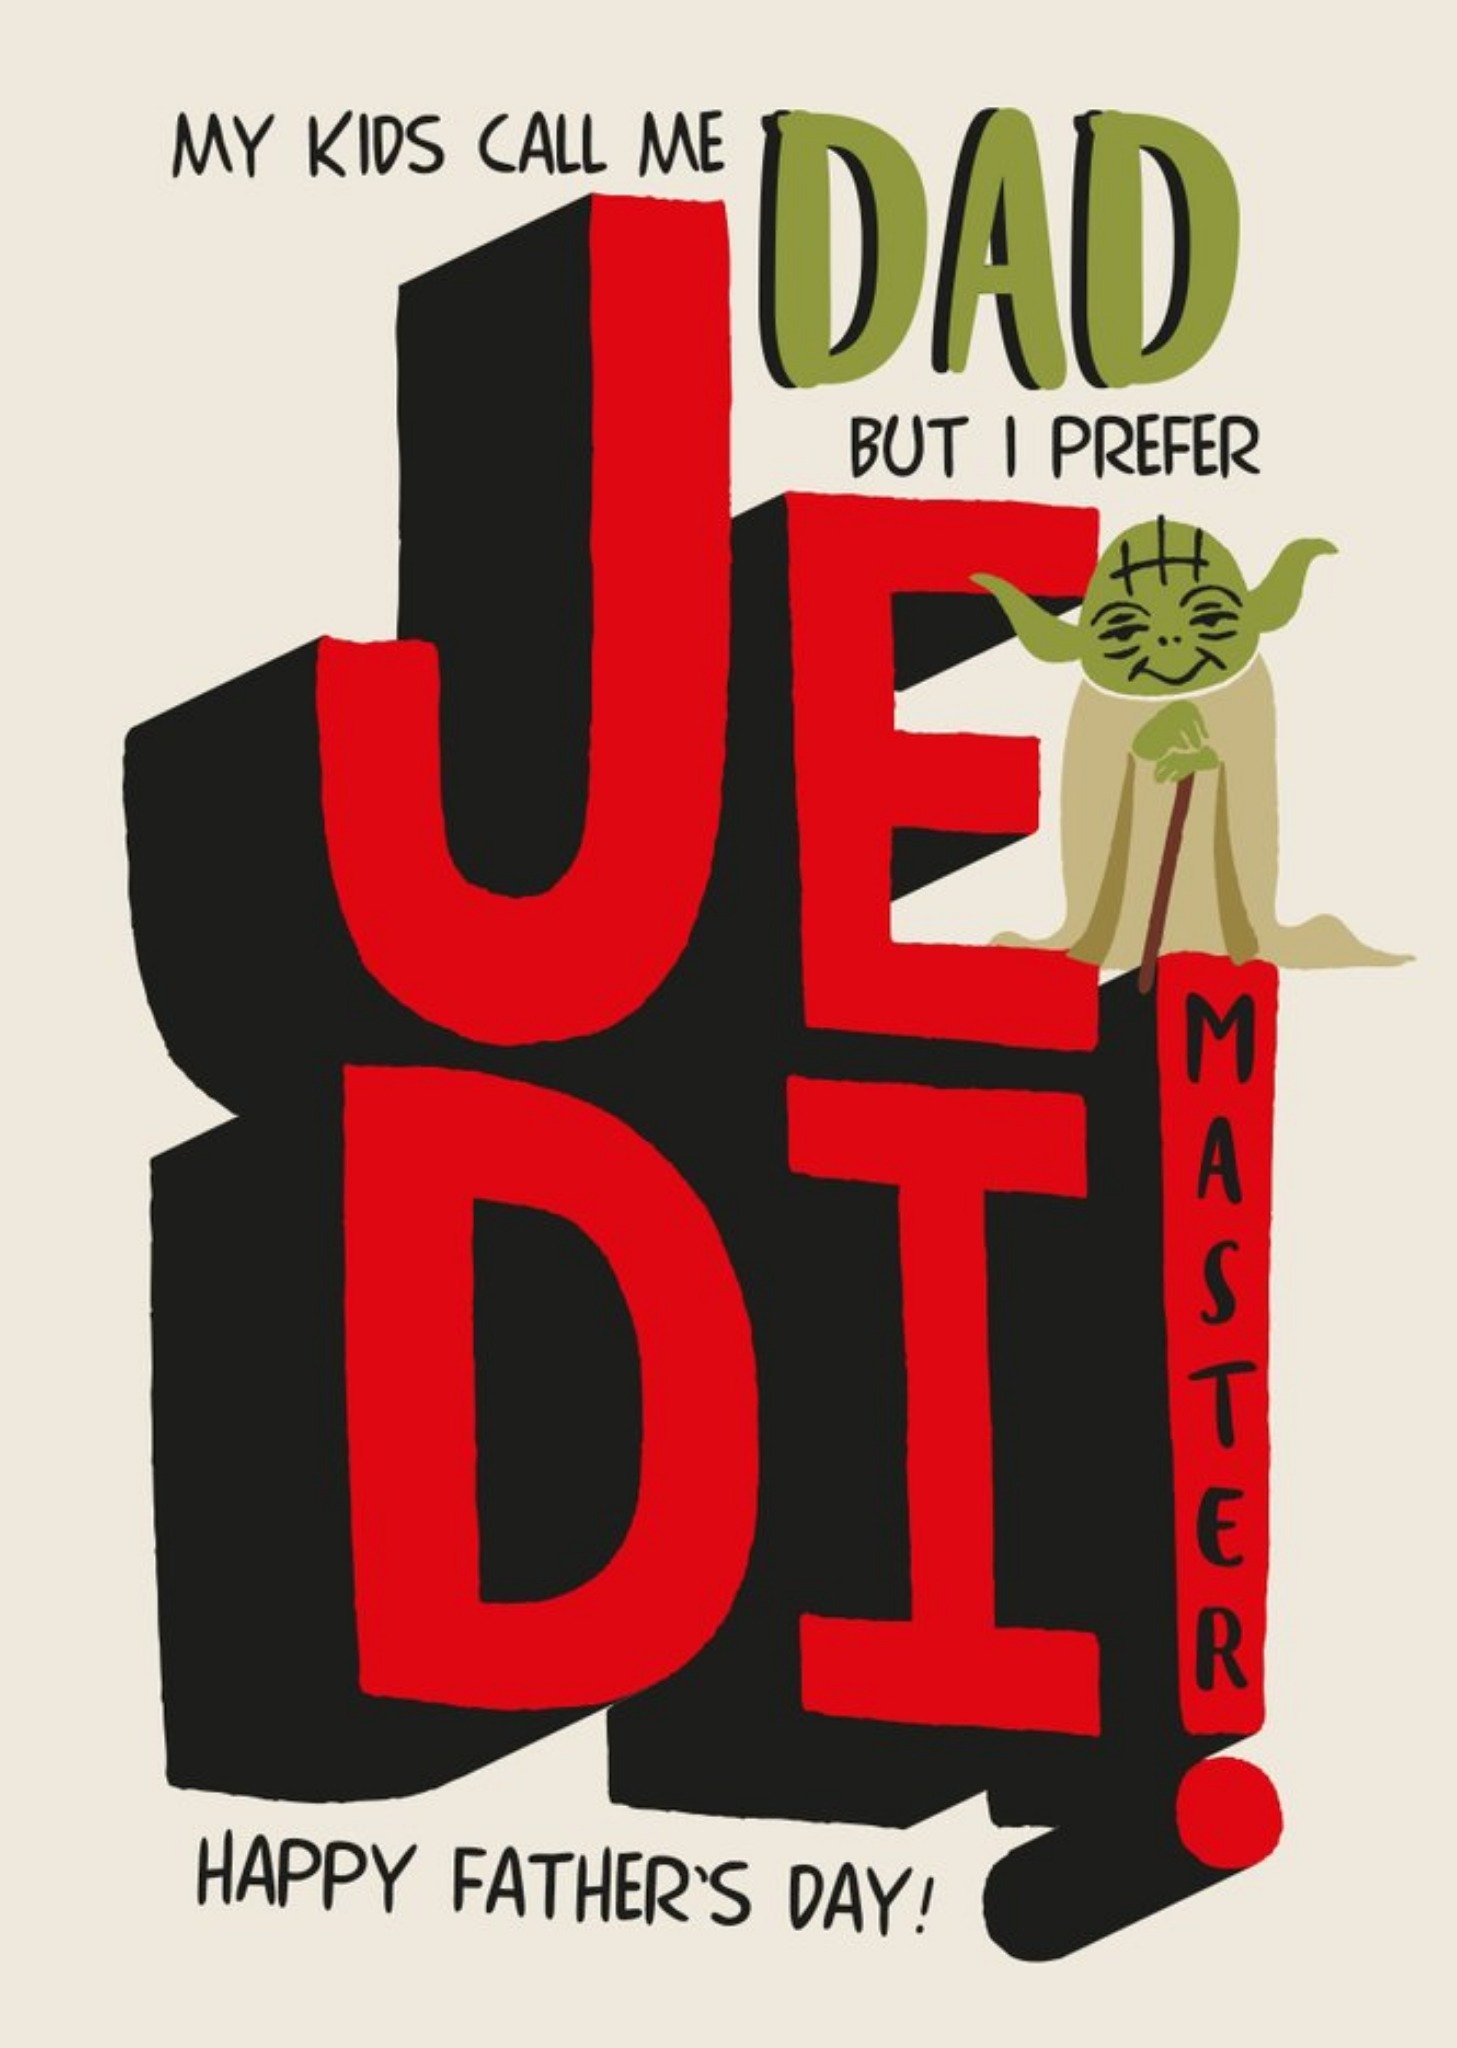 Disney Star Wars Funny Yoda Jedi Master Dad Father's Day Card, Large